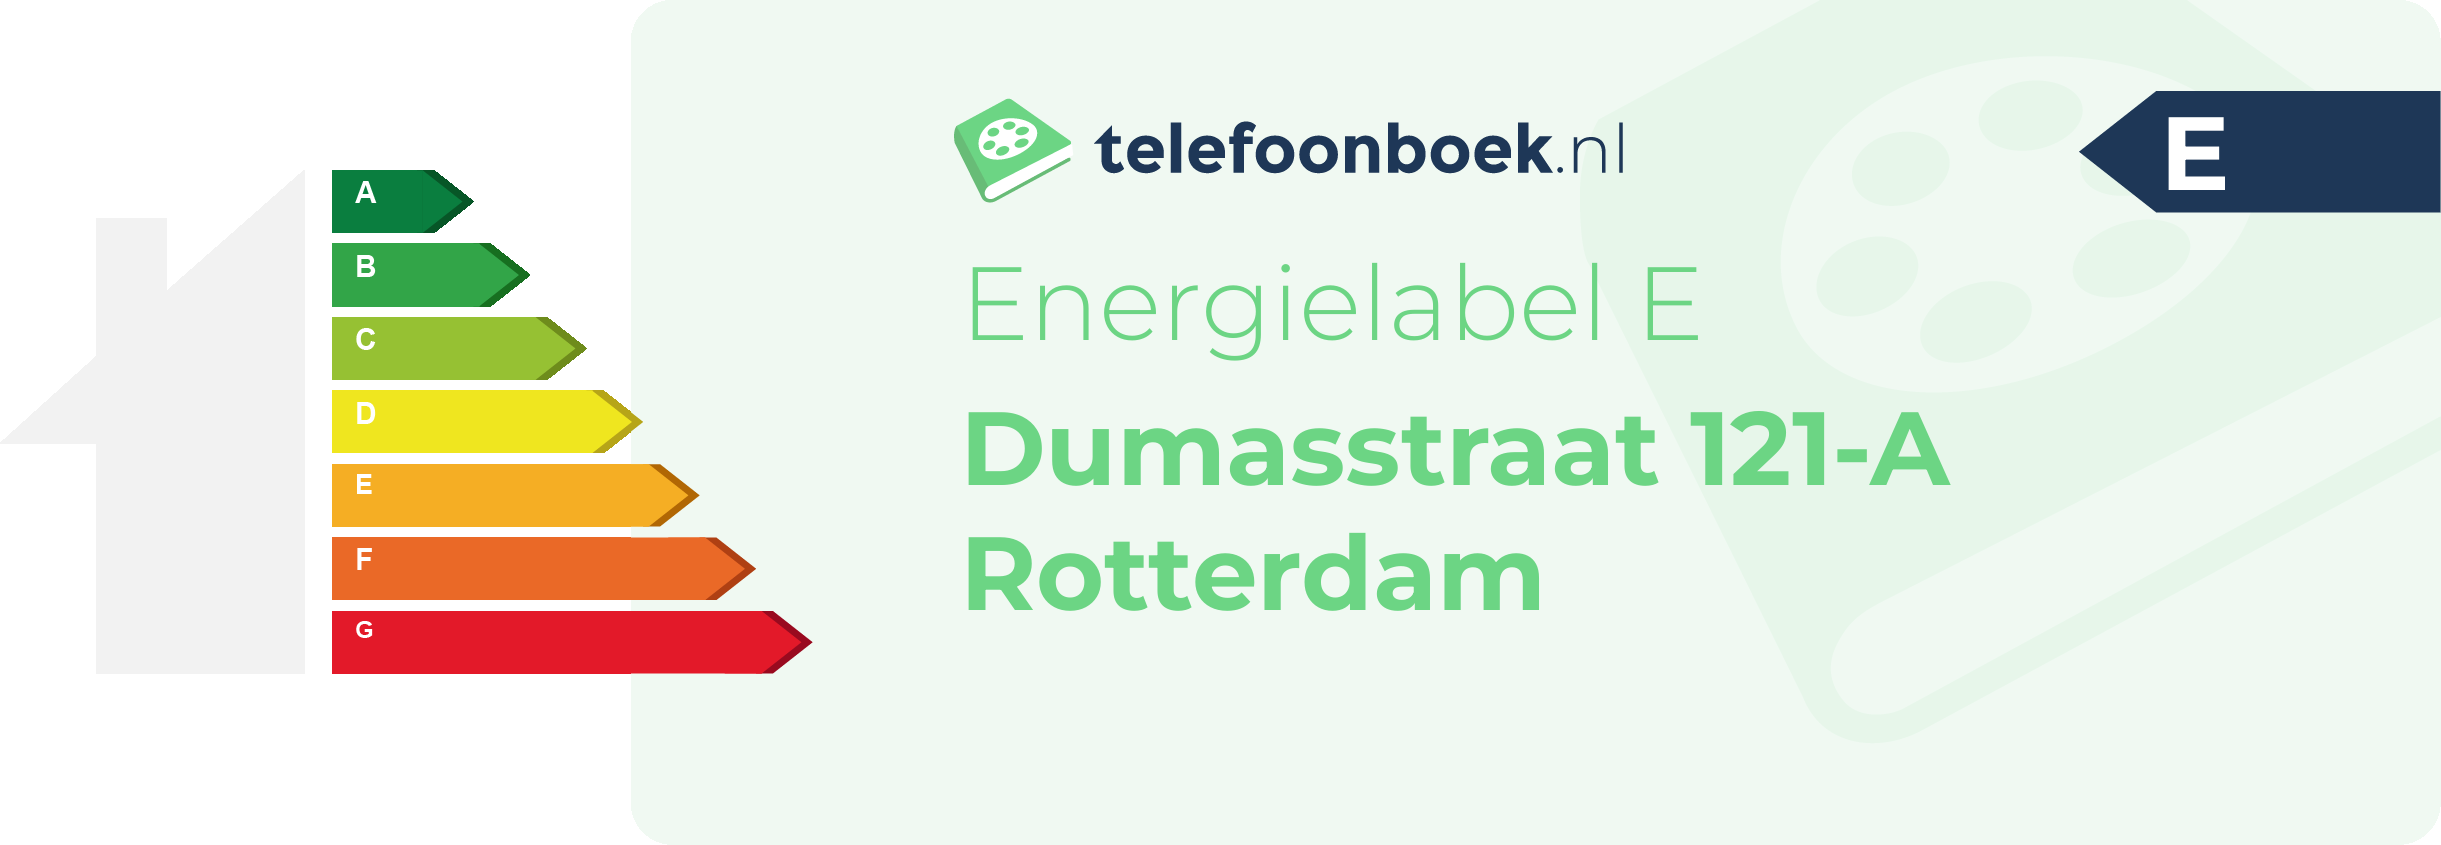 Energielabel Dumasstraat 121-A Rotterdam